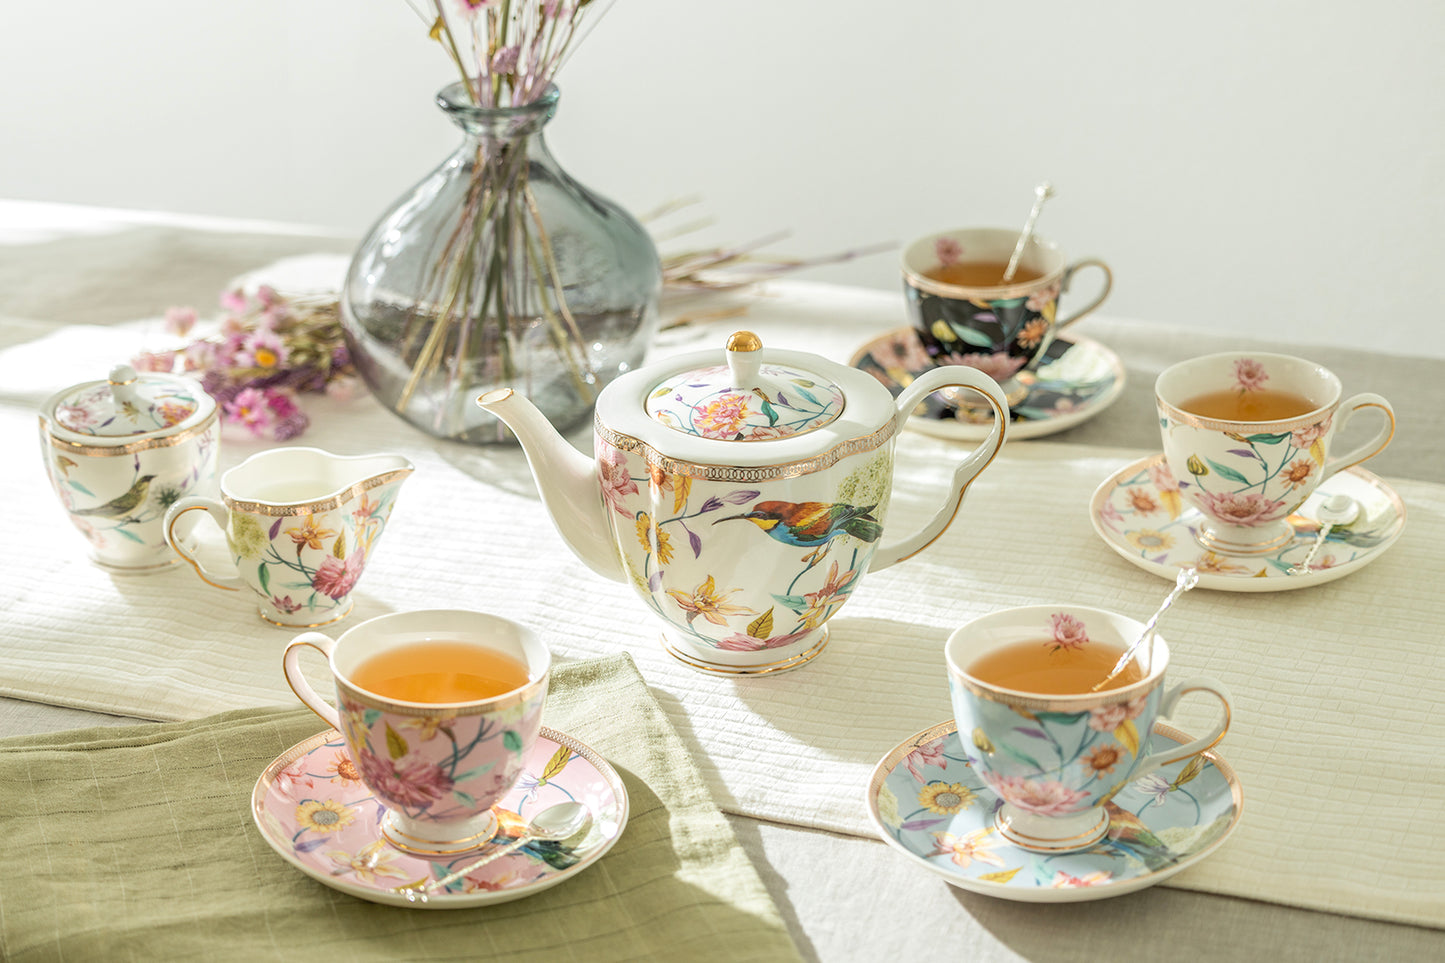 Spring Flowers with Hummingbird Assorted Cups Fine Porcelain Tea Set